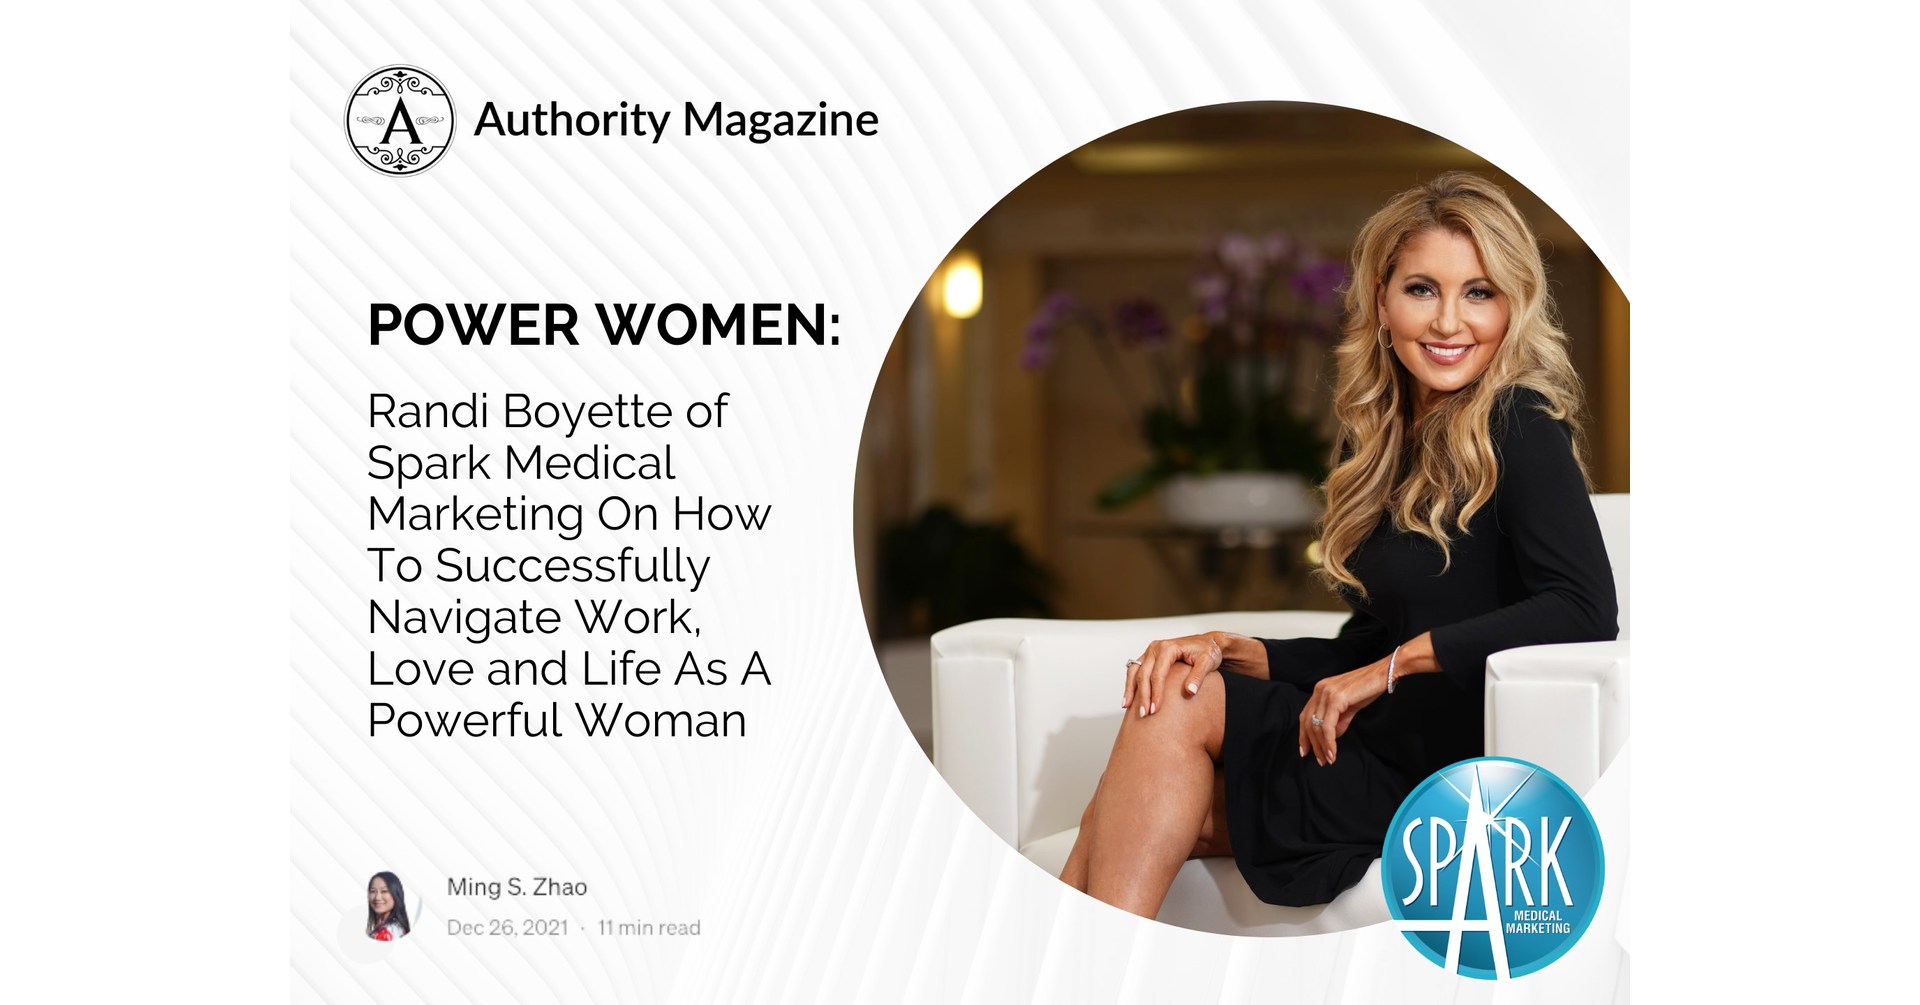 Authority magazine features Randi Boyette in the Power Women series